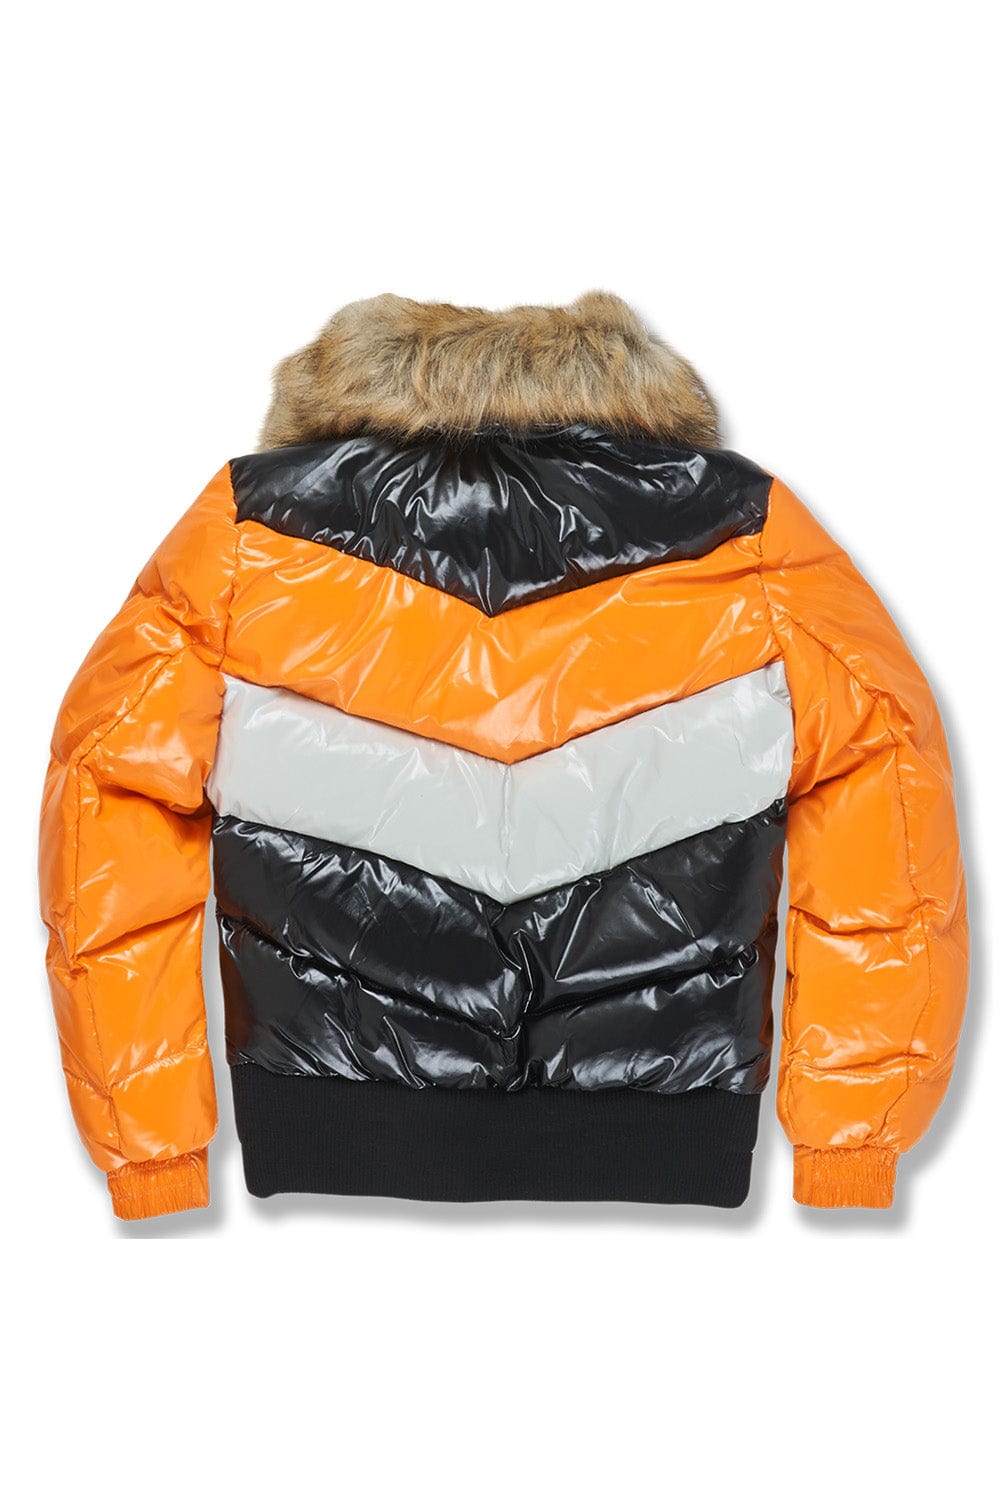 Jordan Craig Women's Sugar Hill Puffer Jacket (Total Orange)